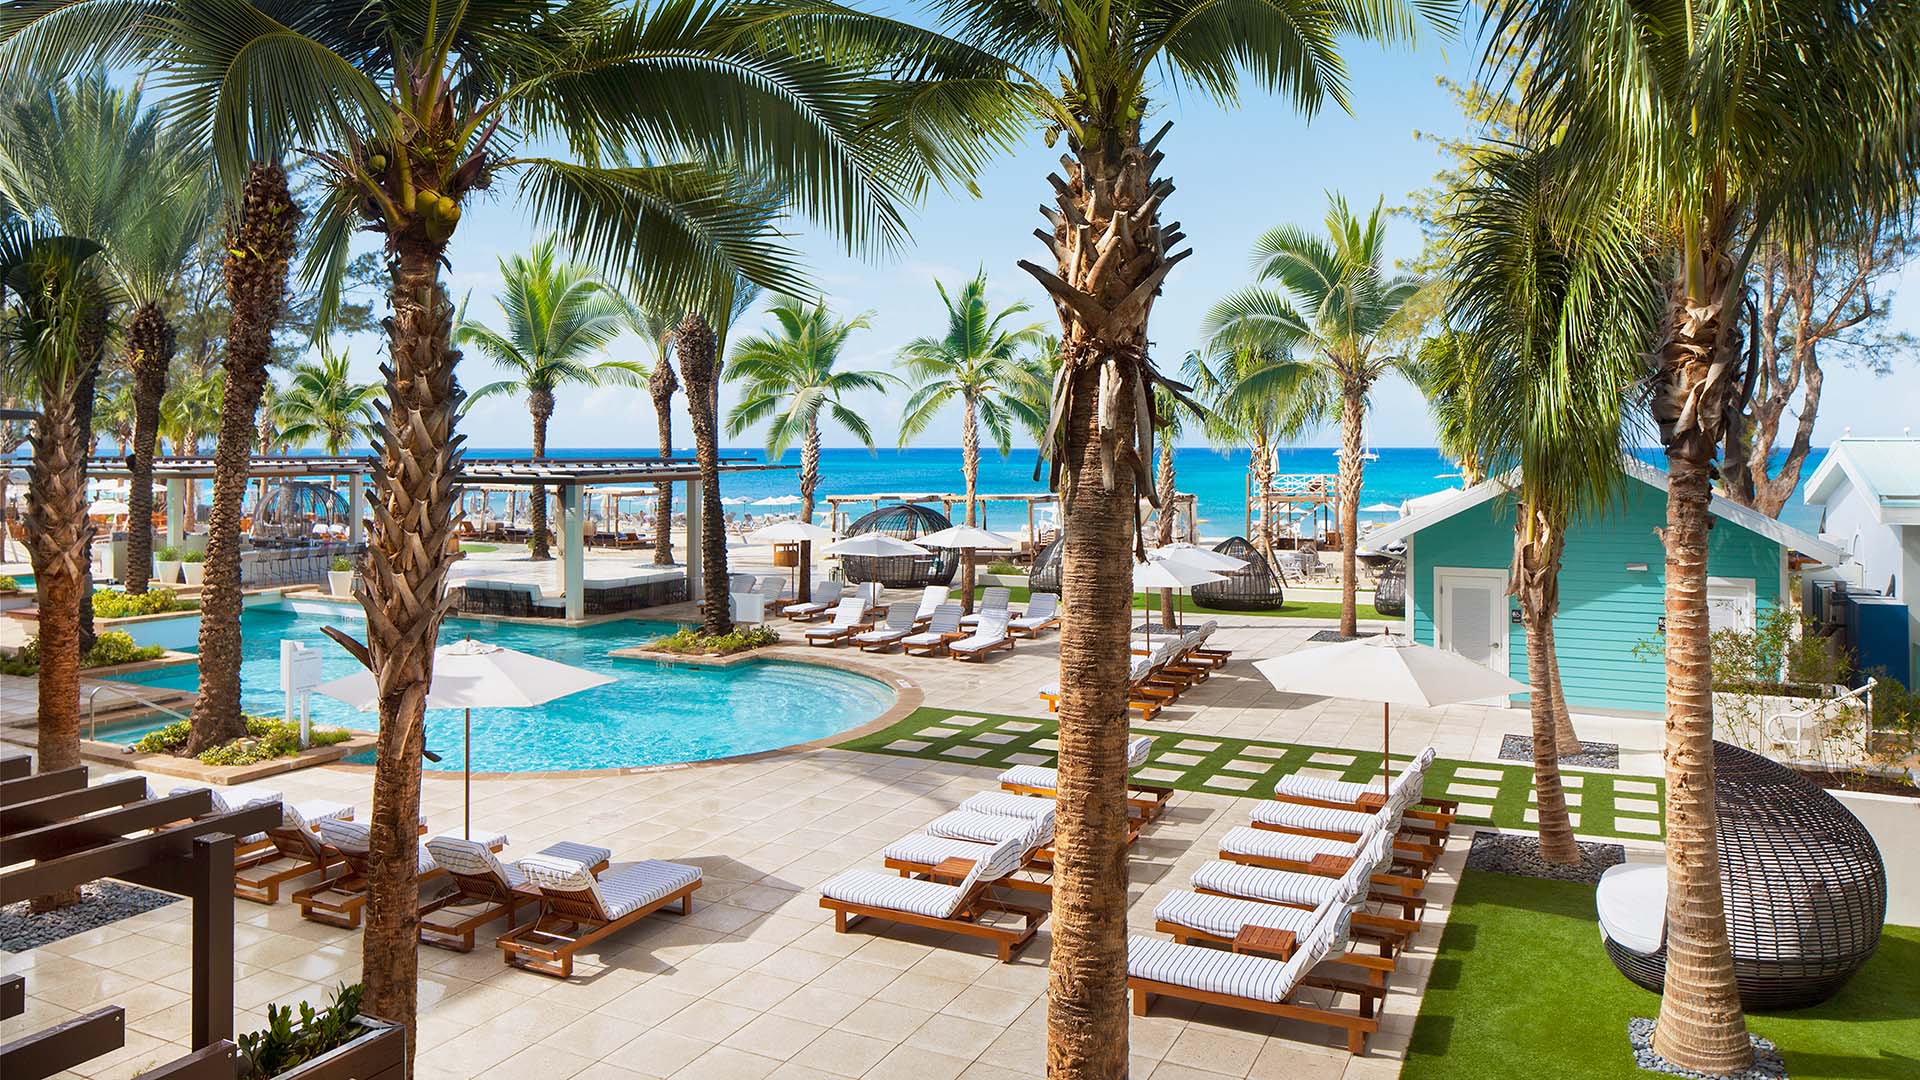 Westin Grand Cayman Seven Mile Beach Resort & Spa pool, beach and palm trees